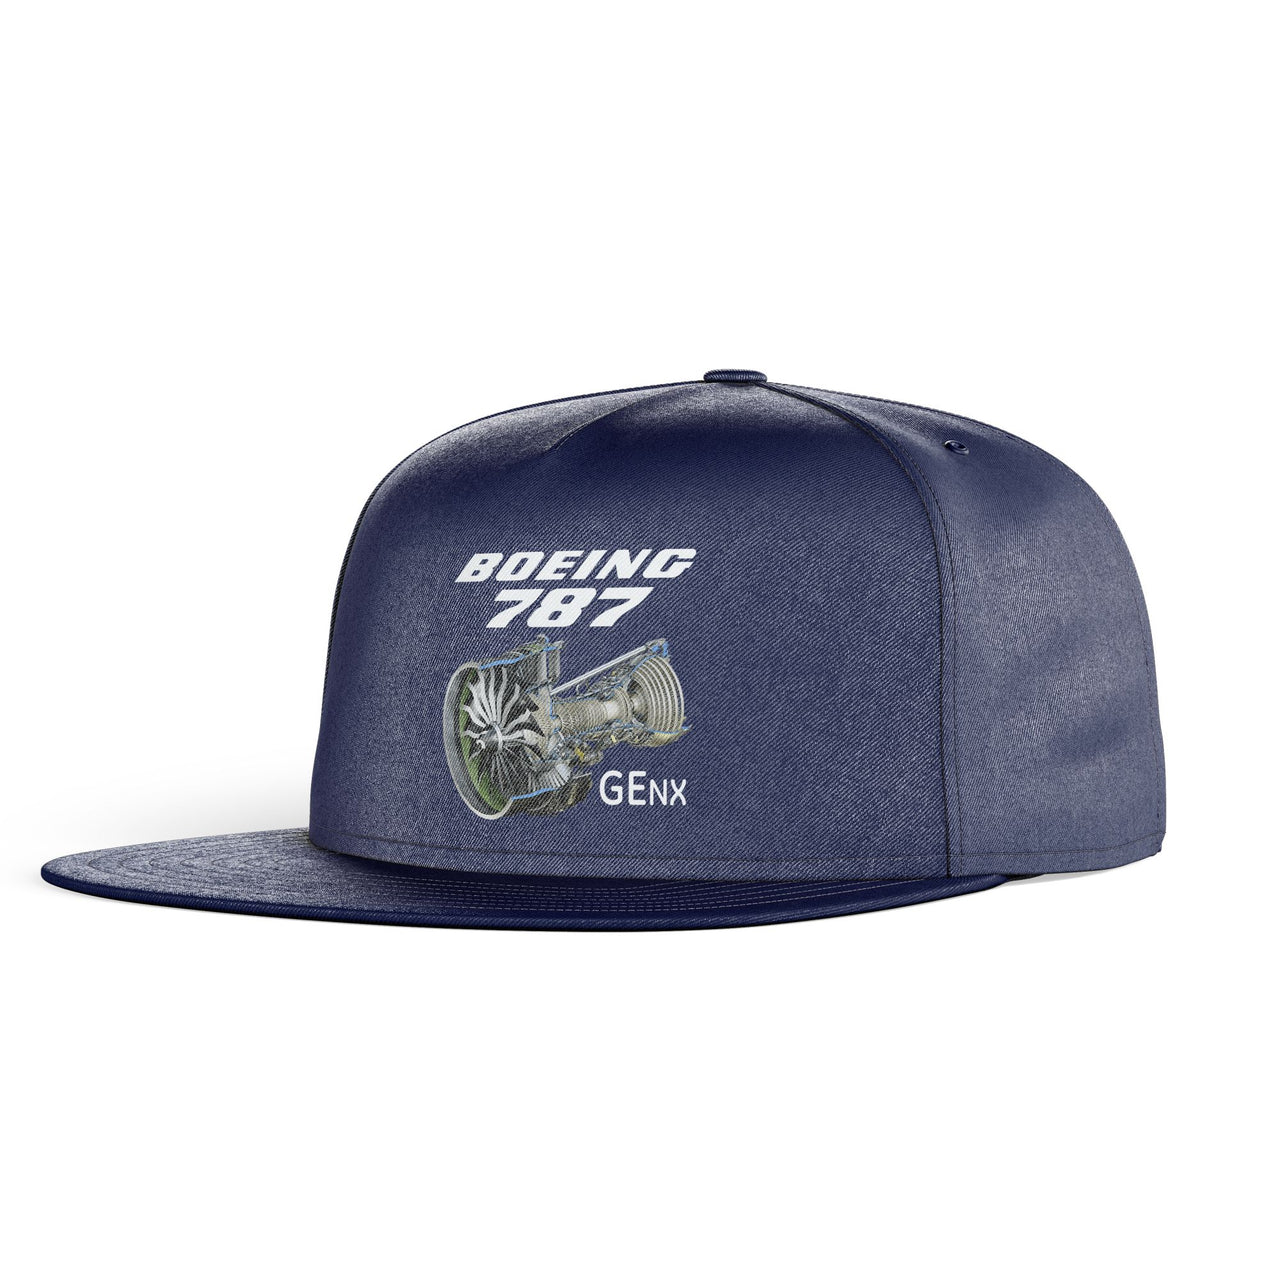 Boeing 787 & GENX Engine Designed Snapback Caps & Hats